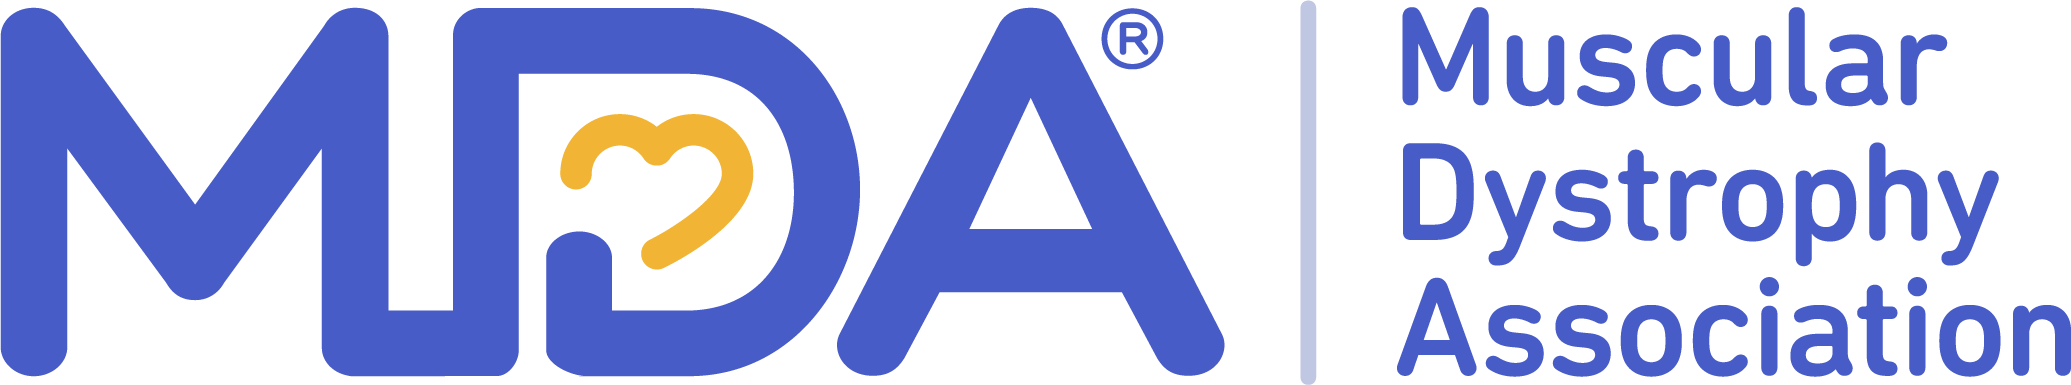 MarketSmart, LLC Logo